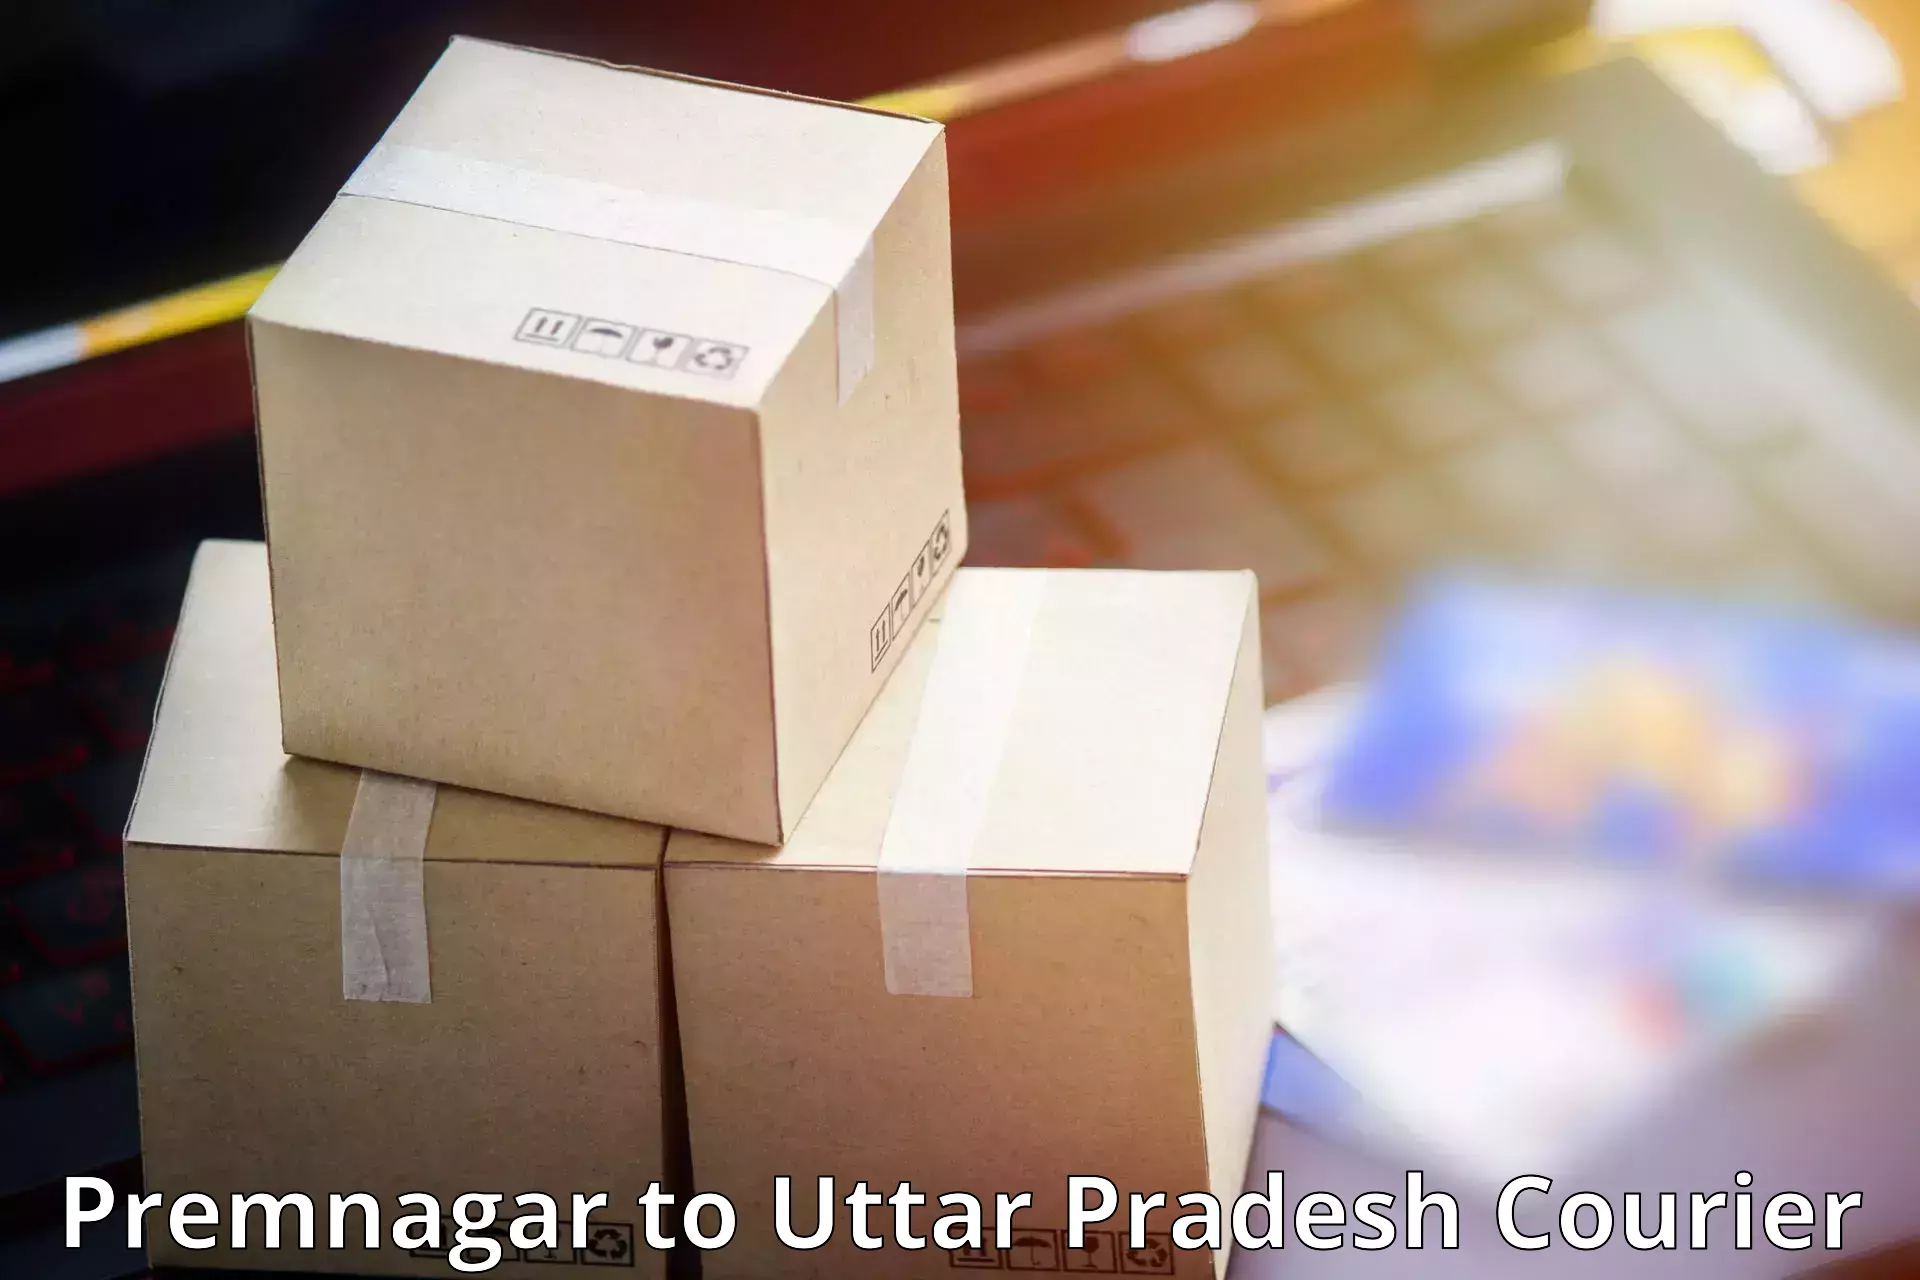 Courier service comparison Premnagar to Dildar Nagar